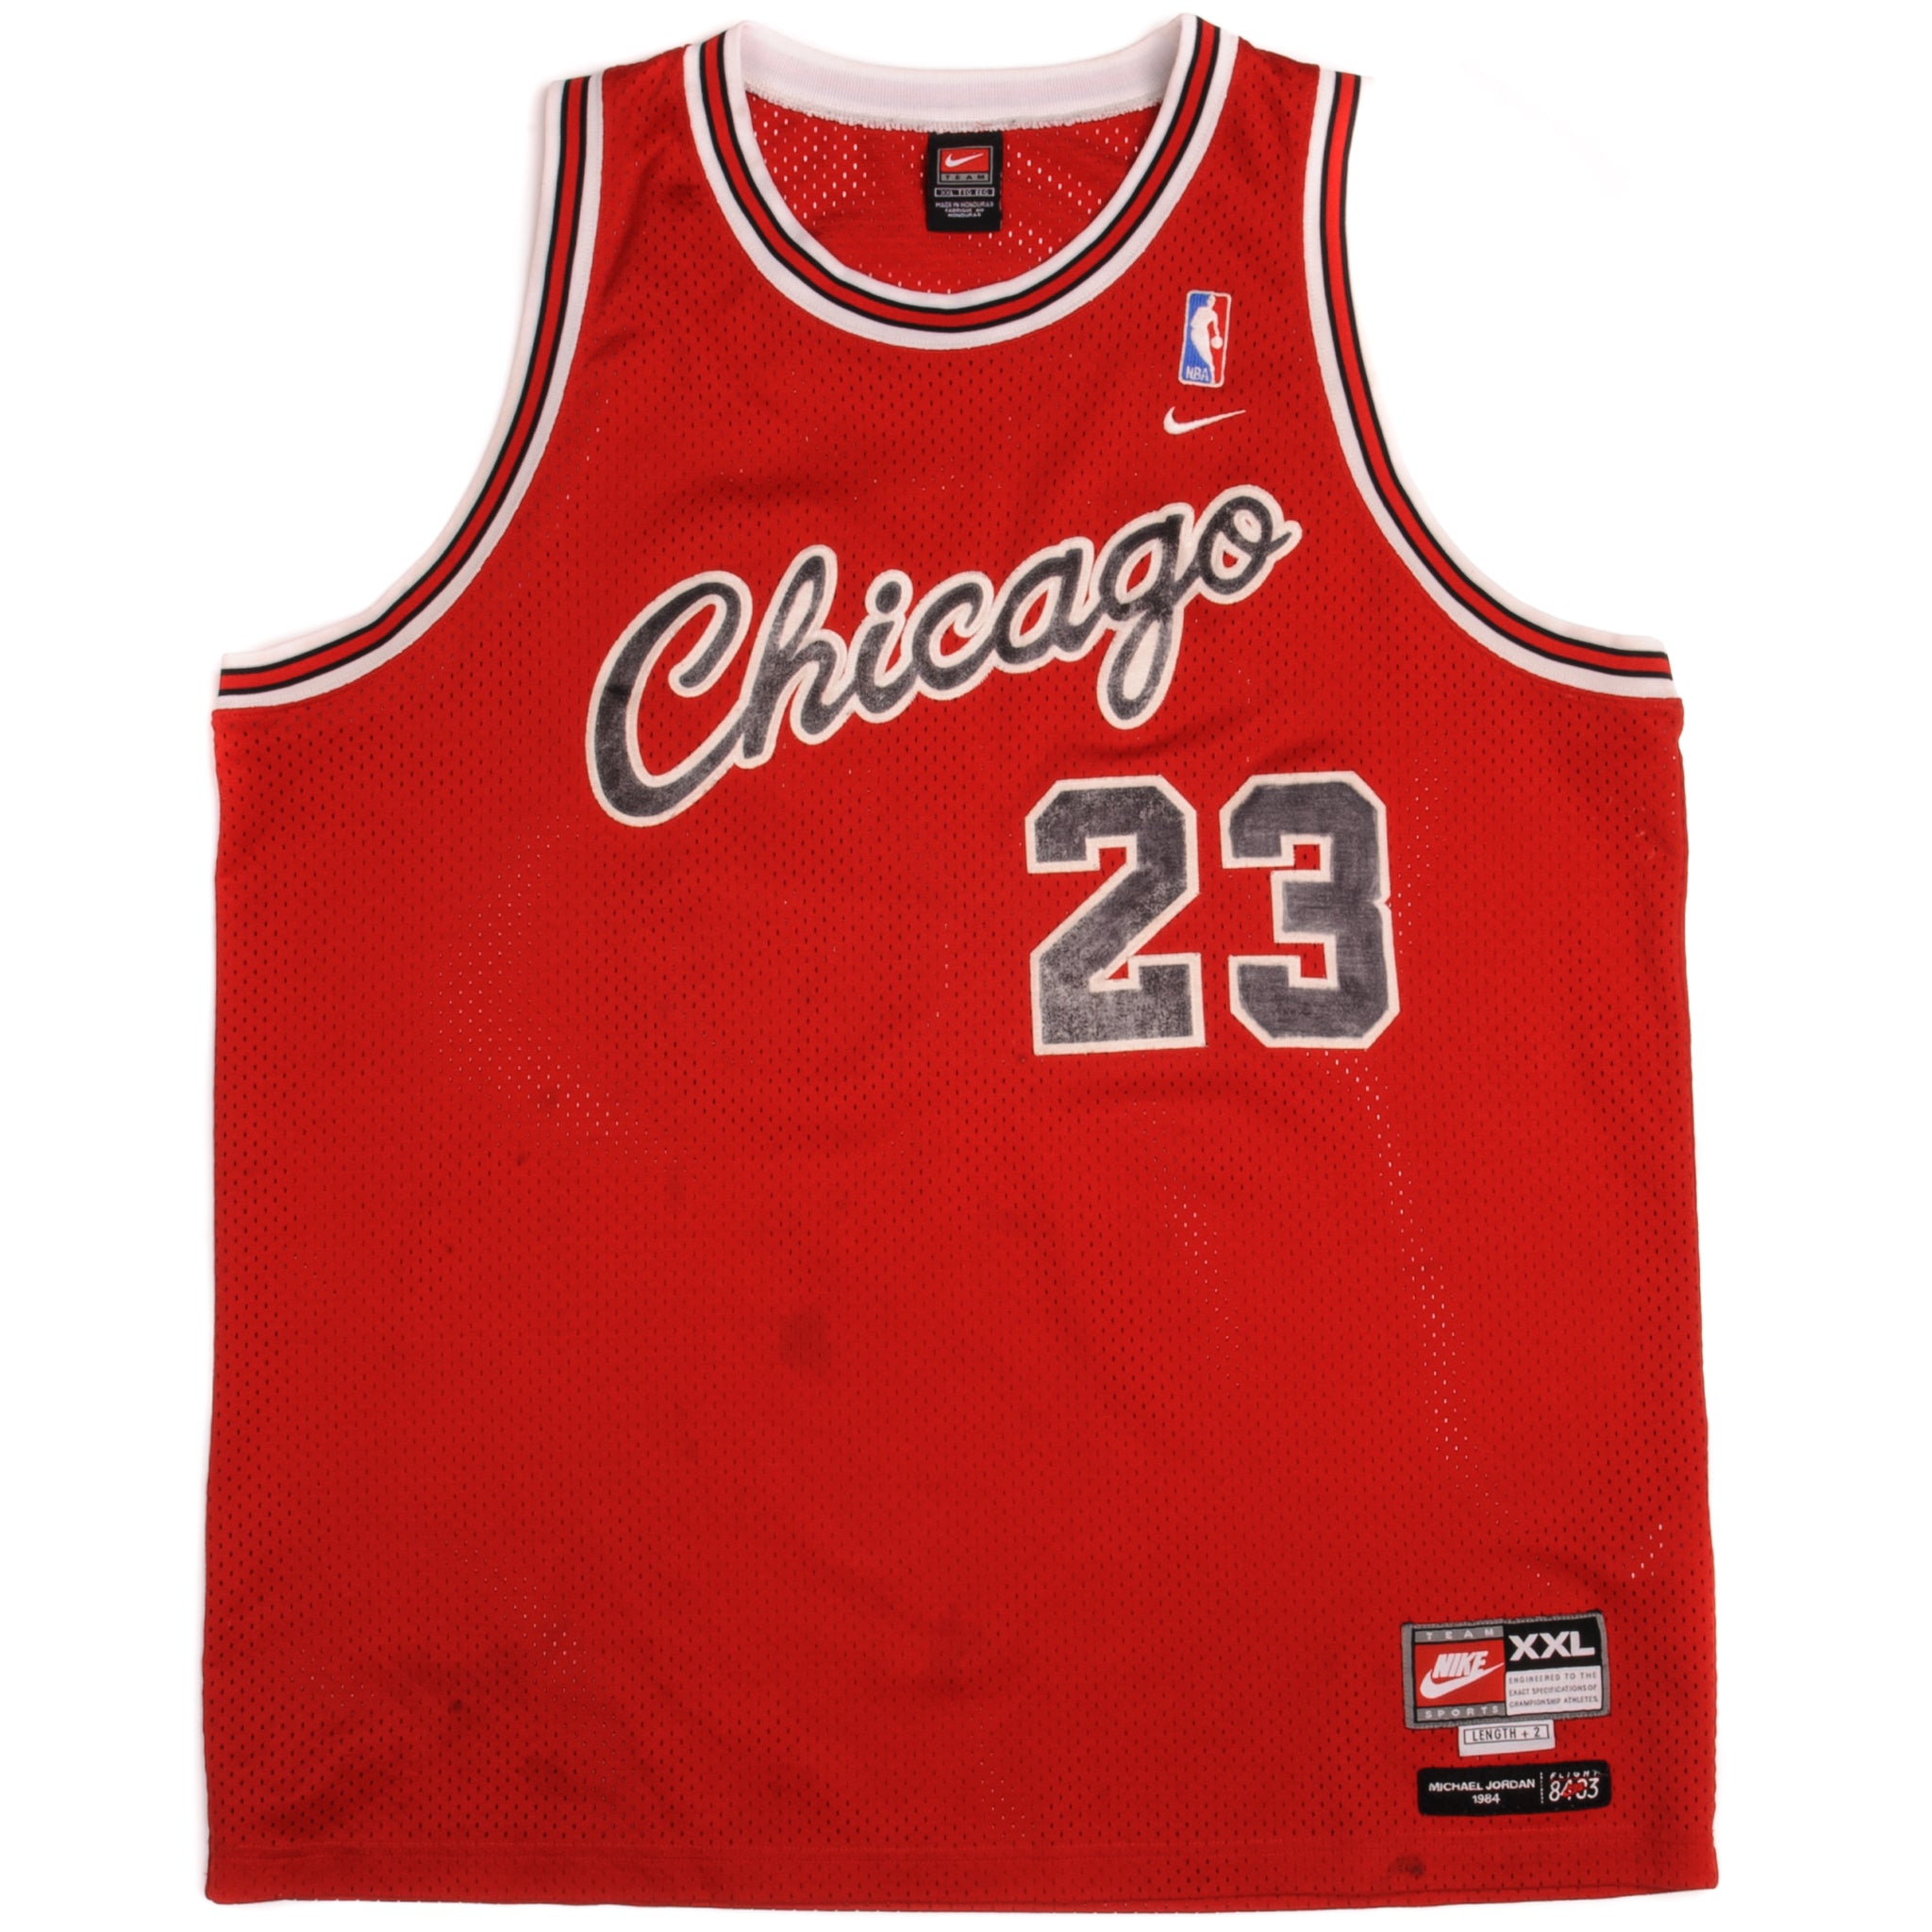 Vintage Michael Jordan Chicago Bulls NBA Basketball Jersey